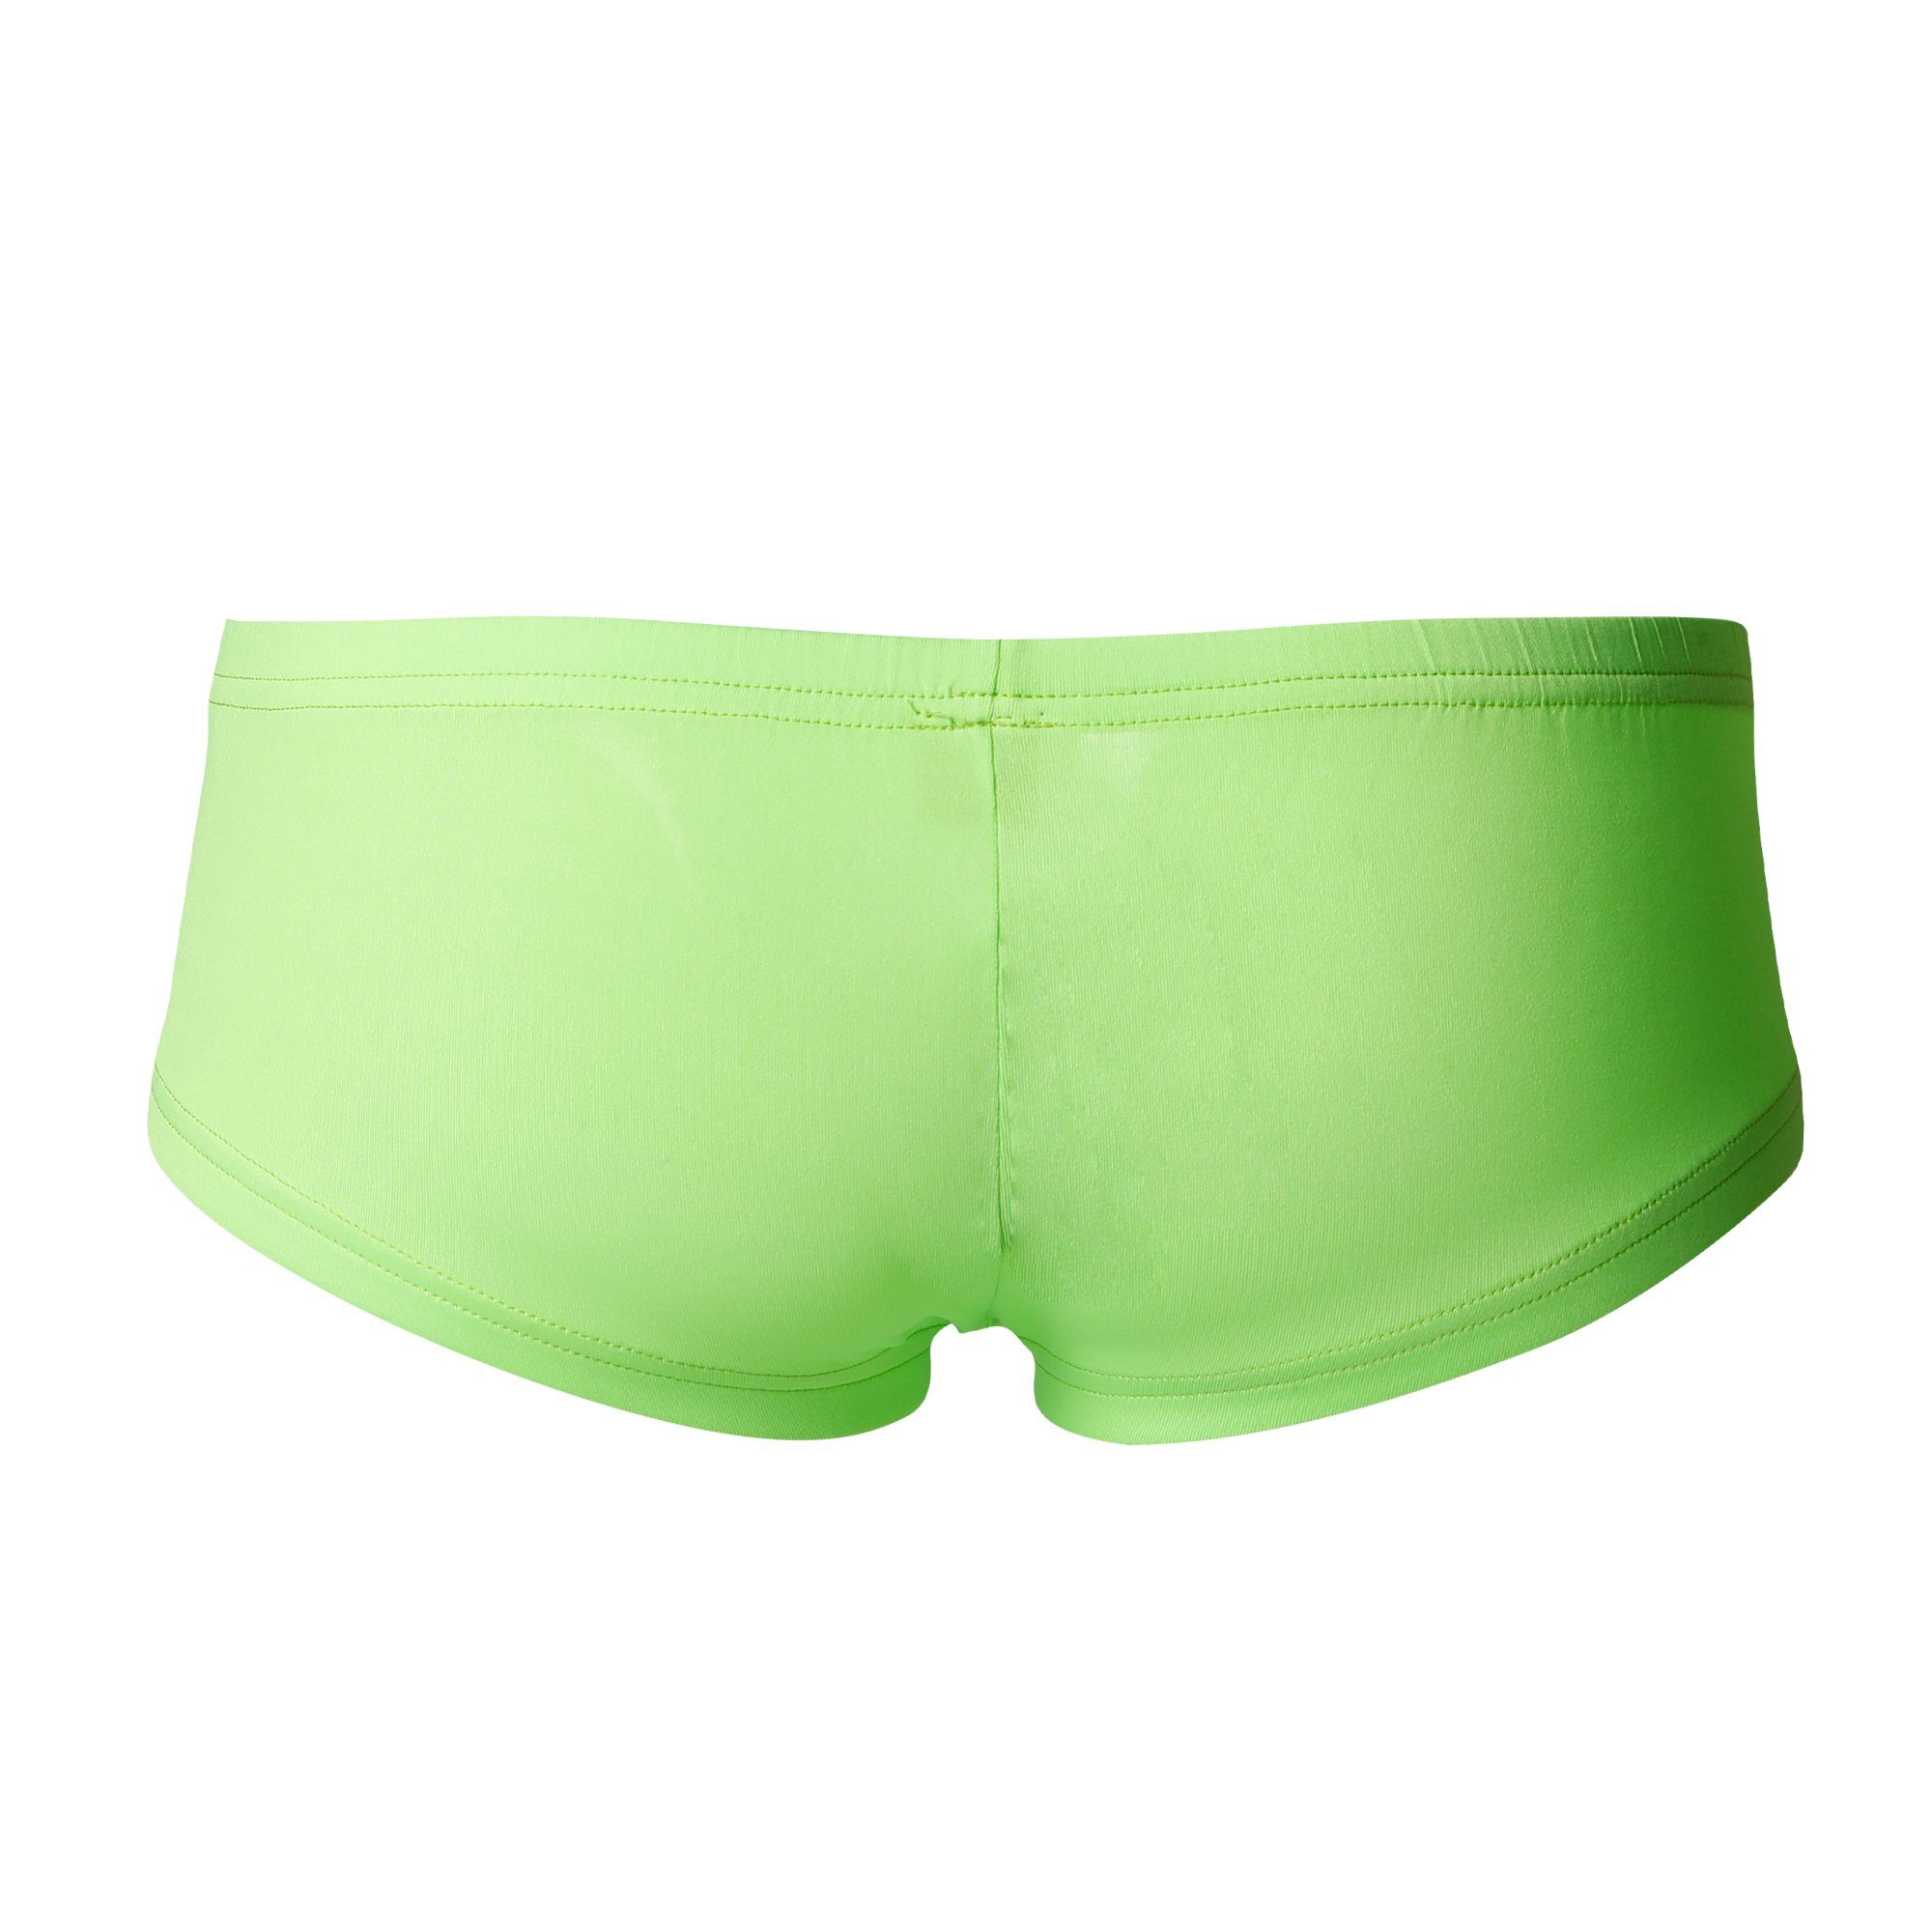 Shorts - NeonGreen XL Booty - CUT4MEN CUT4MEN S Pants Retro